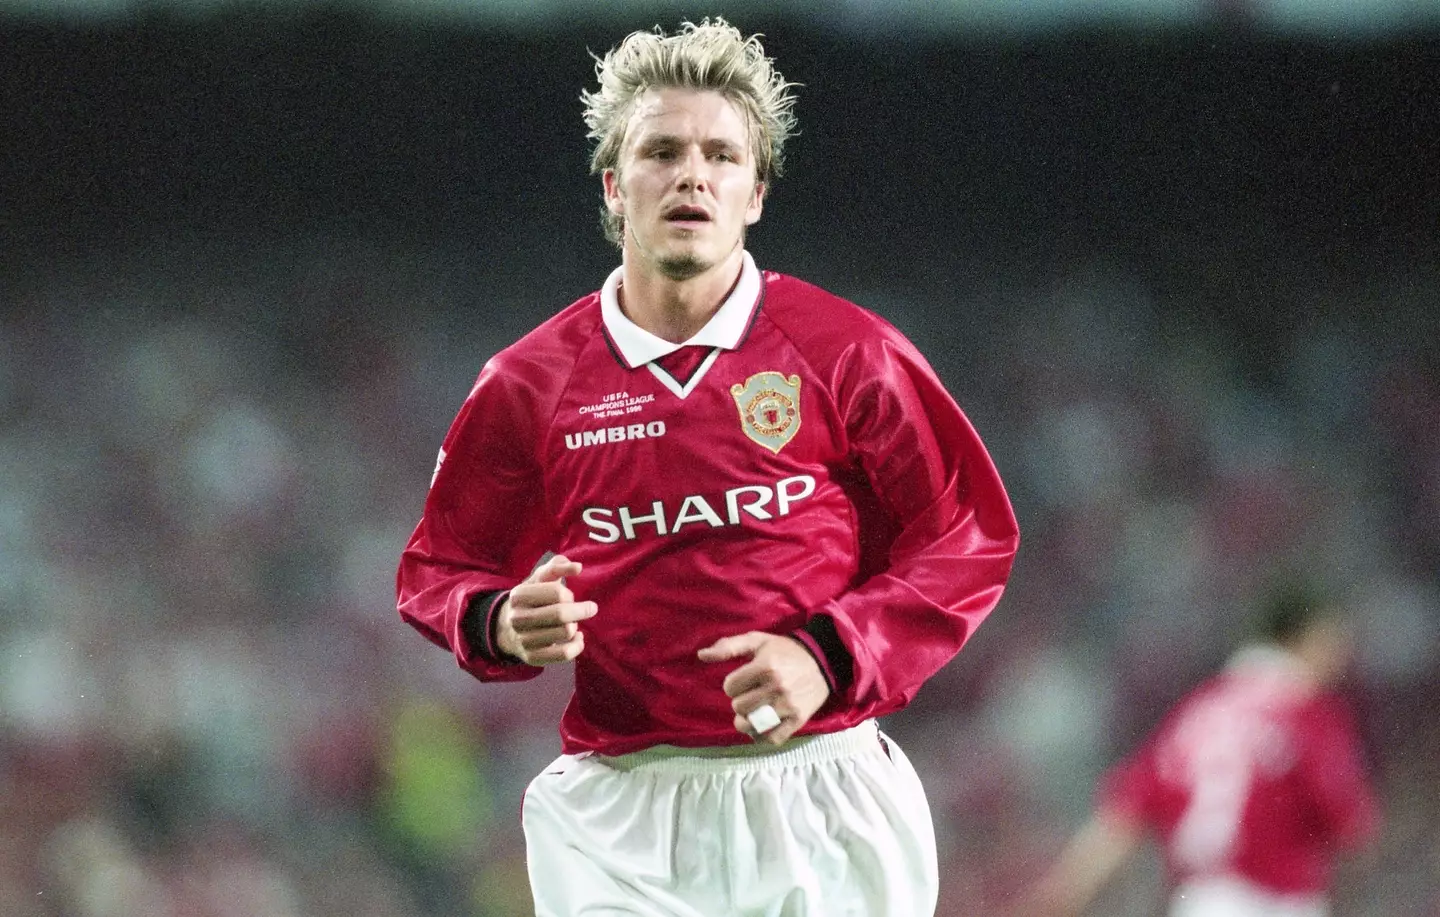 Beckham played for United until 2003. (Image